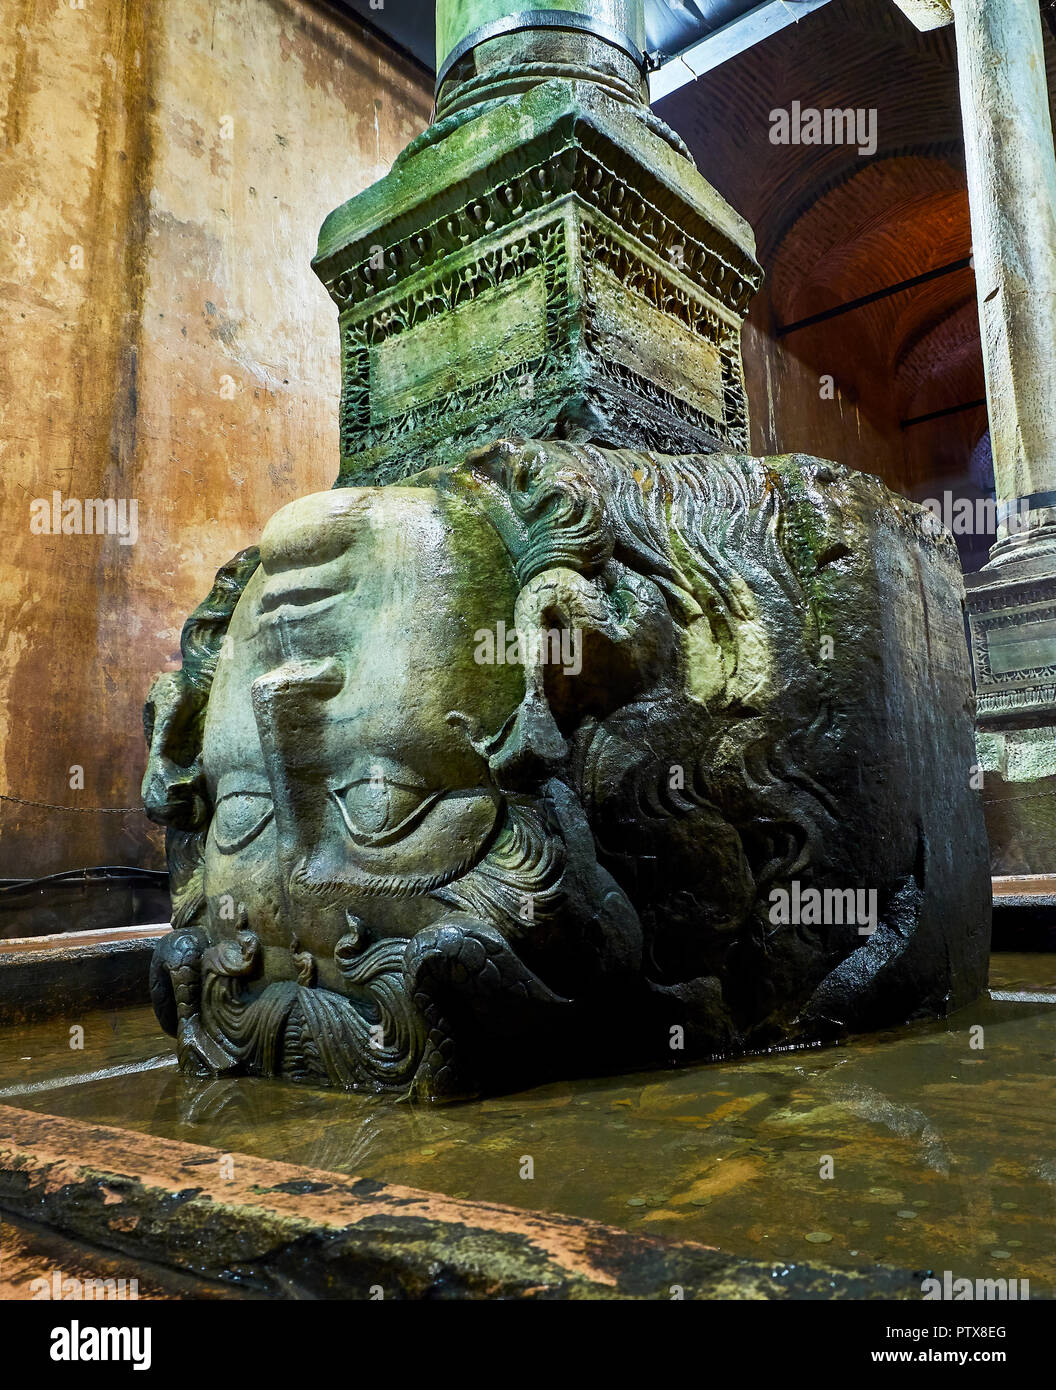 Upside-down head of Medusa in the subterranean Basilica Cistern, also known as Yerebatan Sarnici. Istanbul, Turkey. Stock Photo